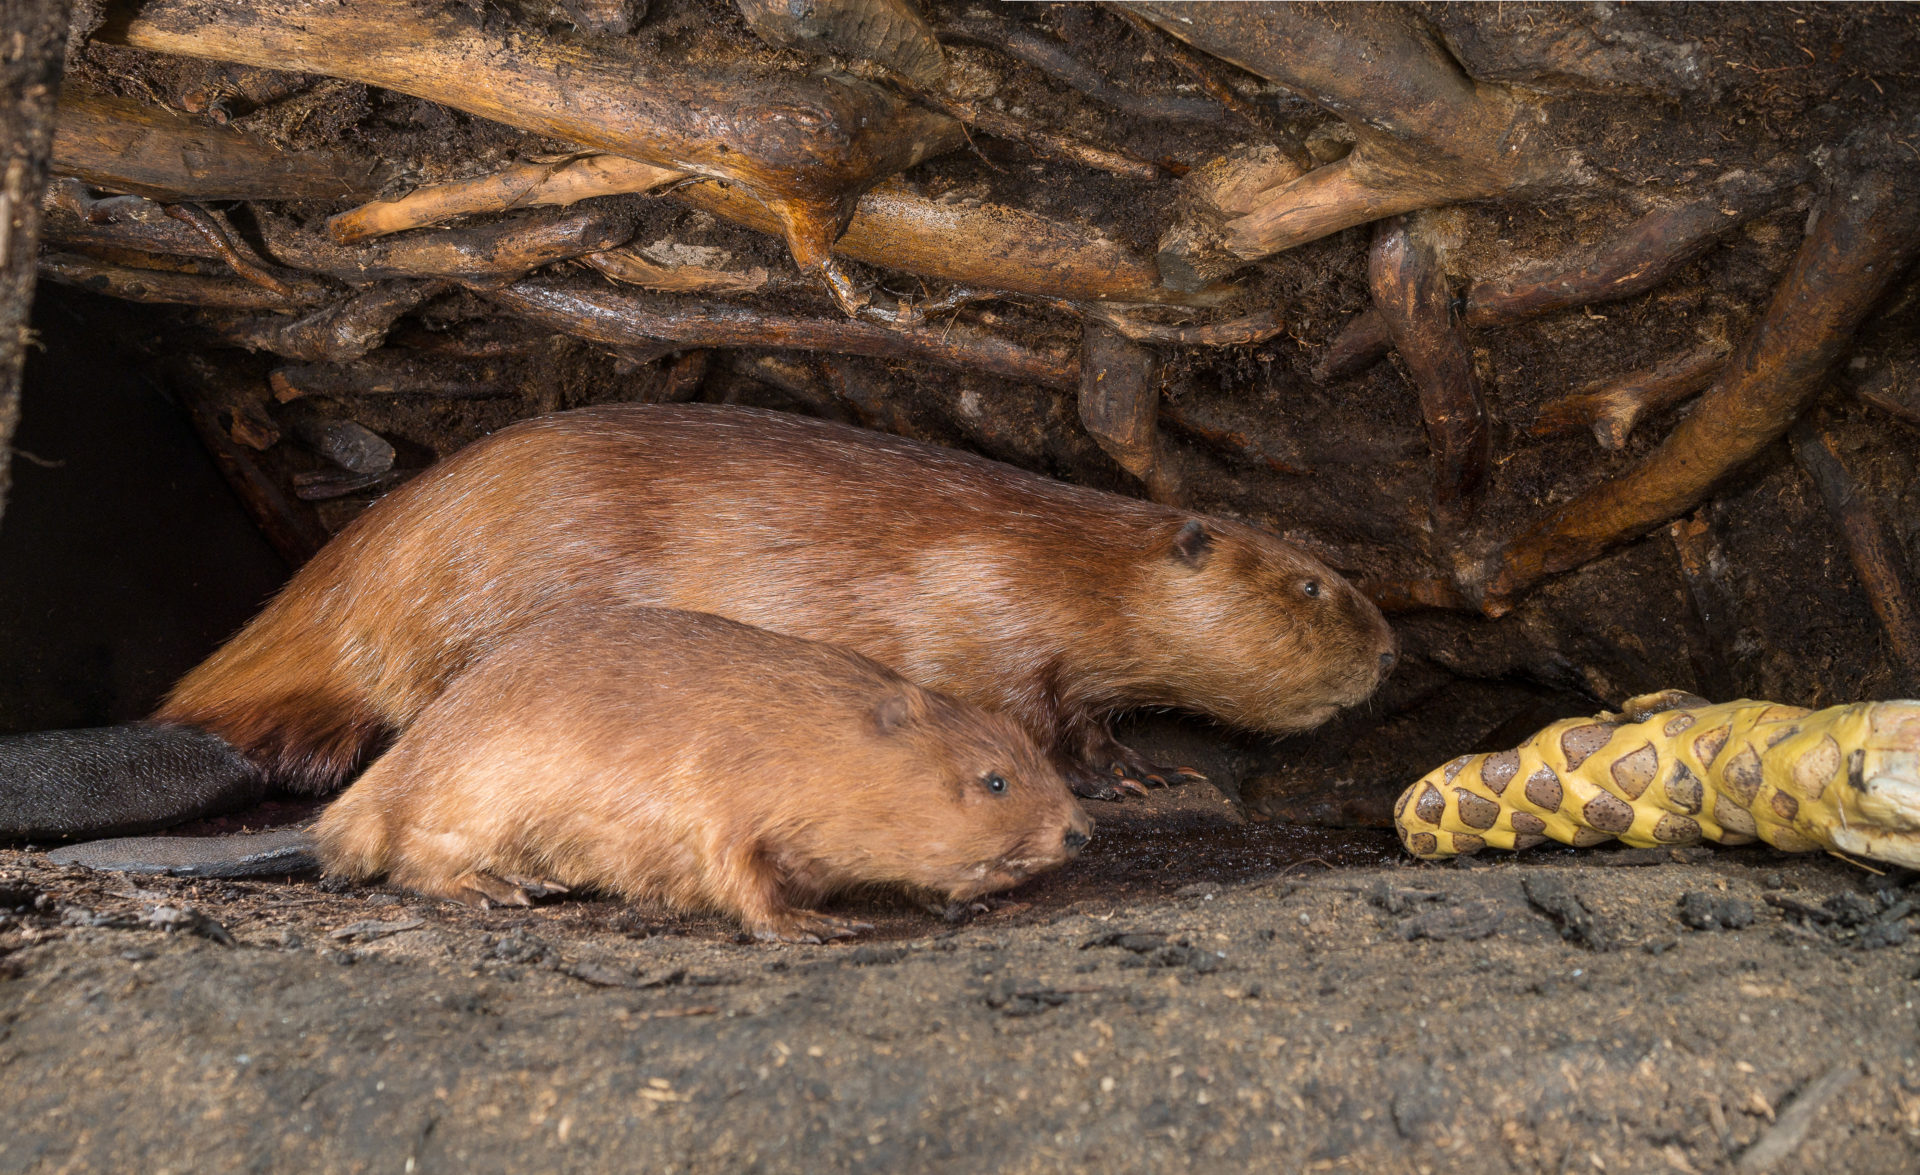 diorama beaver lodge with 2 beavers